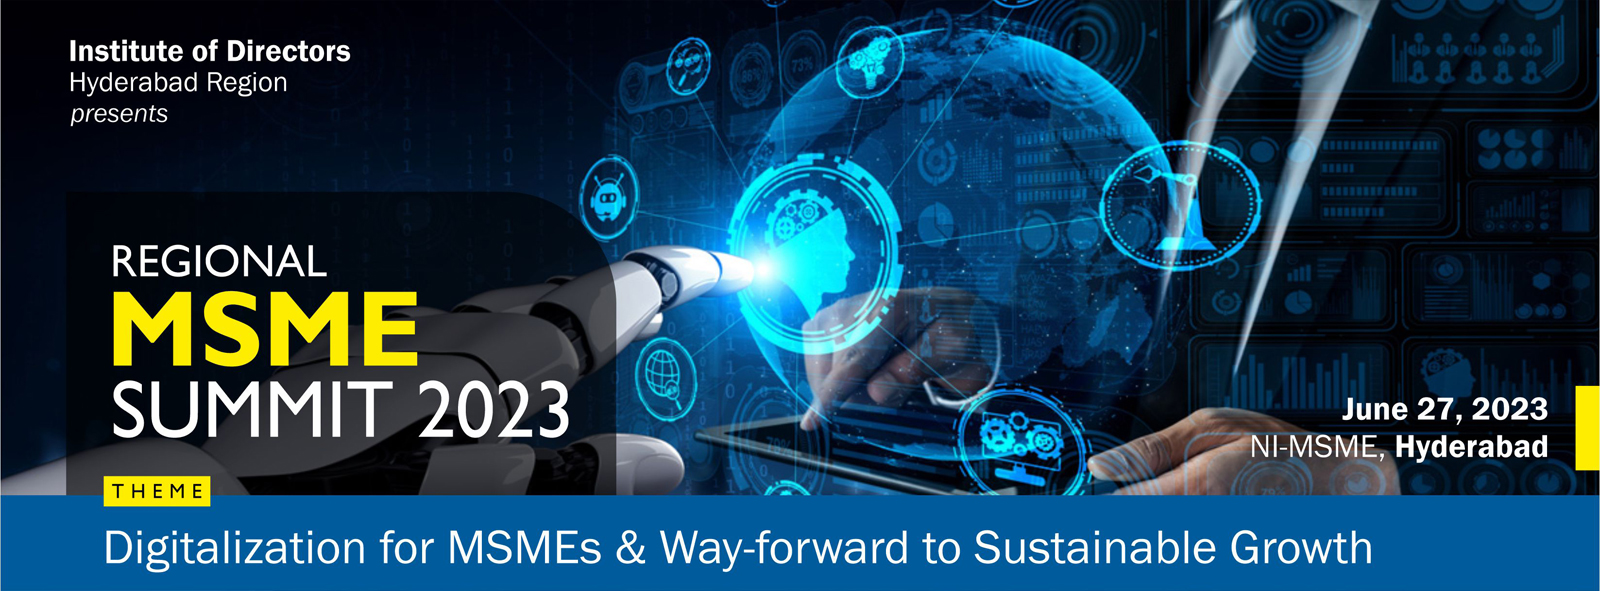 Regional MSME Summit - Digitalization for MSMEs & Way-forward to Sustainable Growth